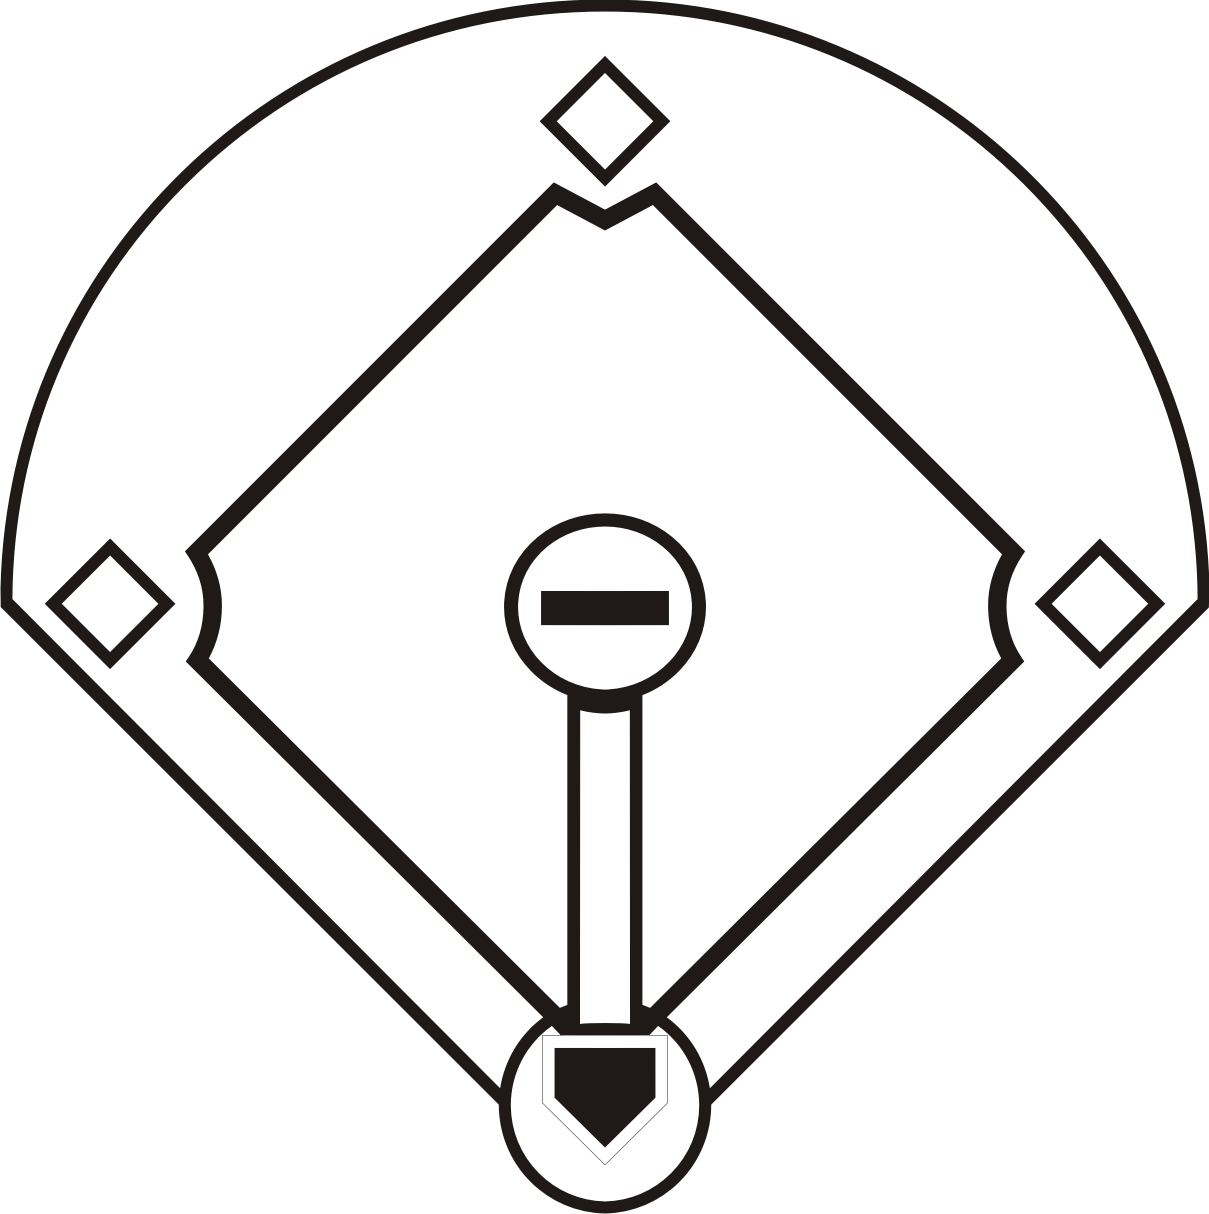 Blank Baseball Diamond | Free Download Clip Art | Free Clip Art ...